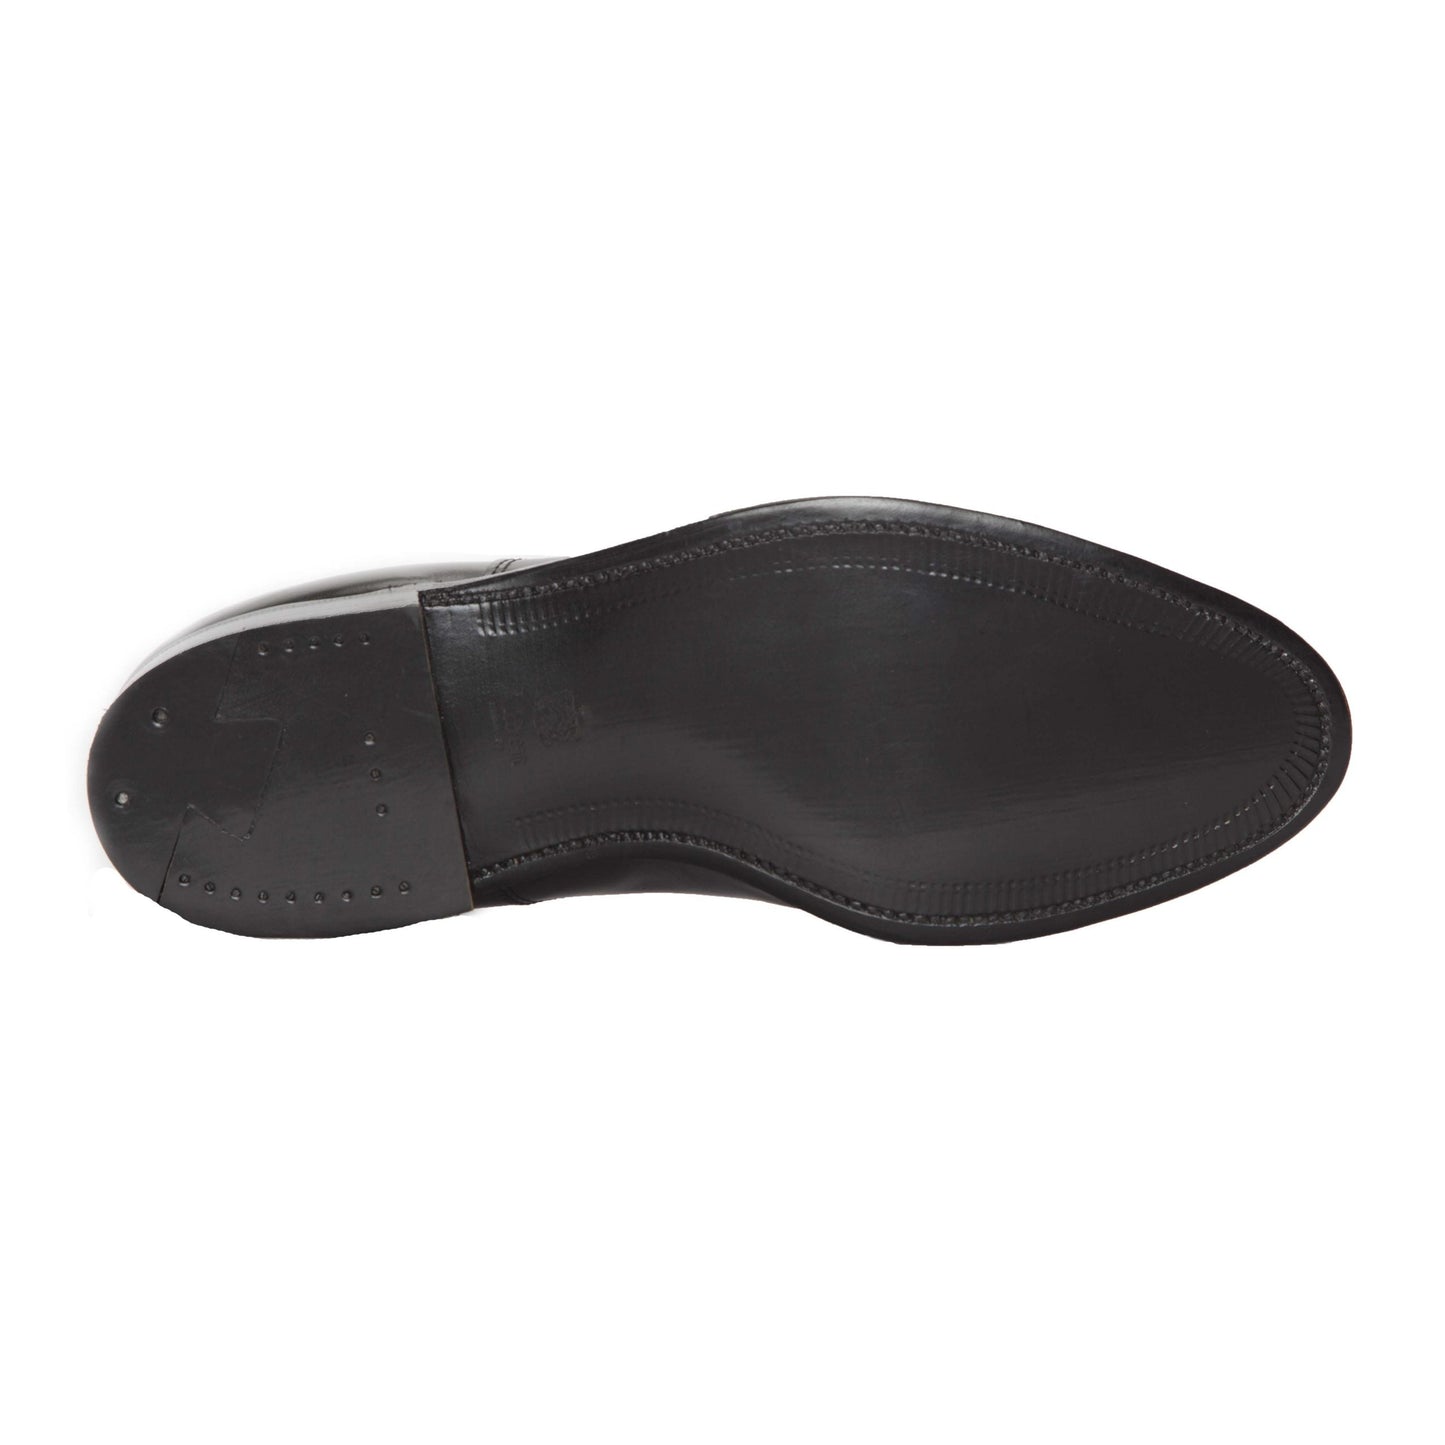 67269 - High Vamp Loafer in Black Shell Cordovan (Deposit)